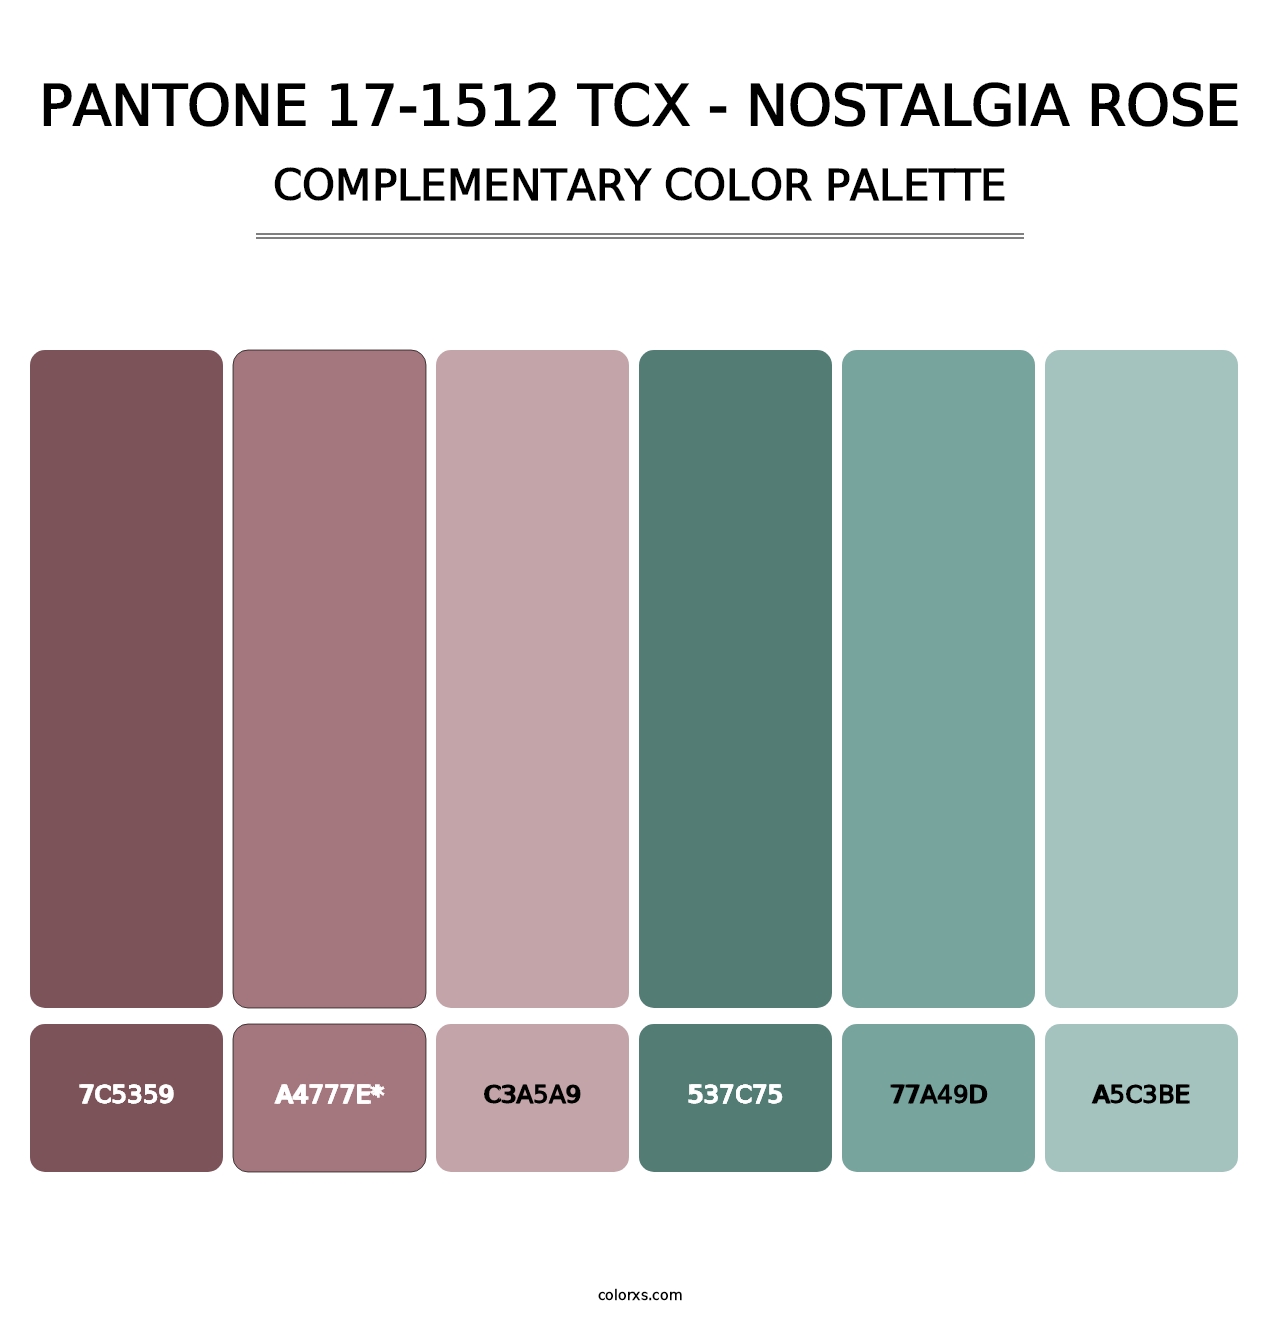 PANTONE 17-1512 TCX - Nostalgia Rose - Complementary Color Palette